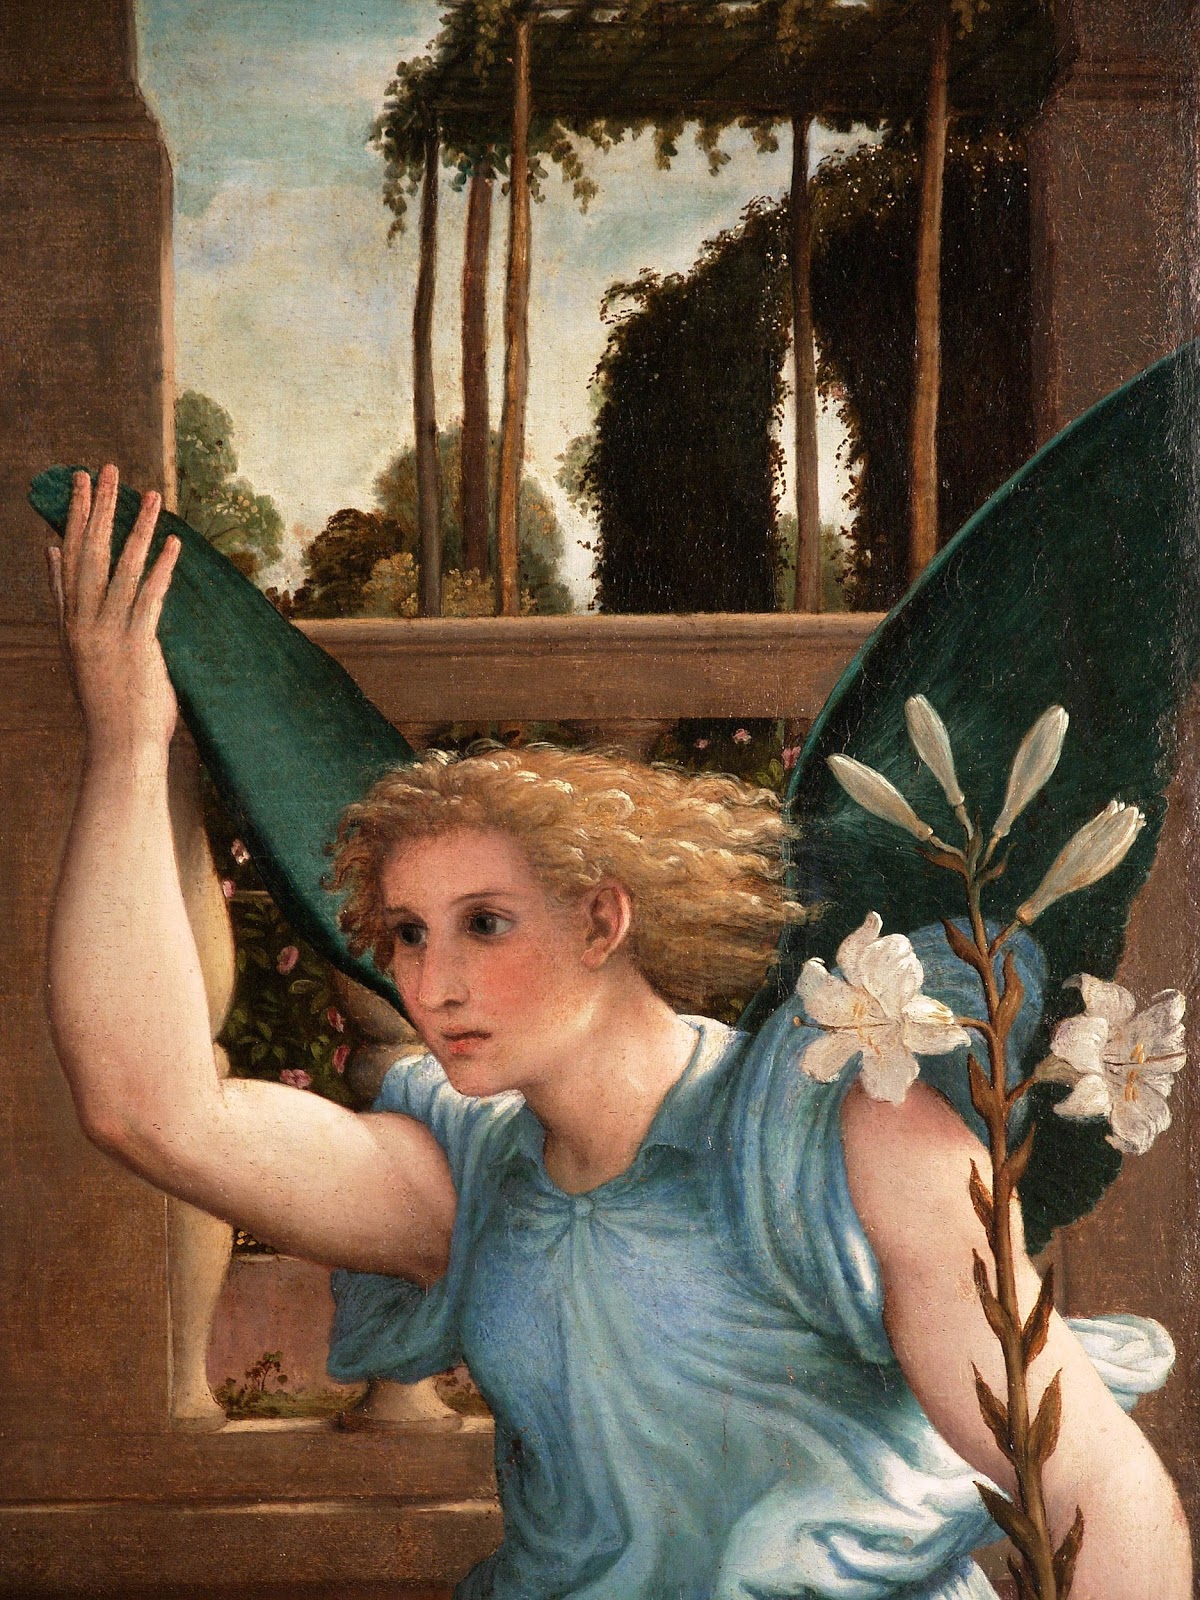 Lorenzo+Lotto-1480-1557 (43).jpg